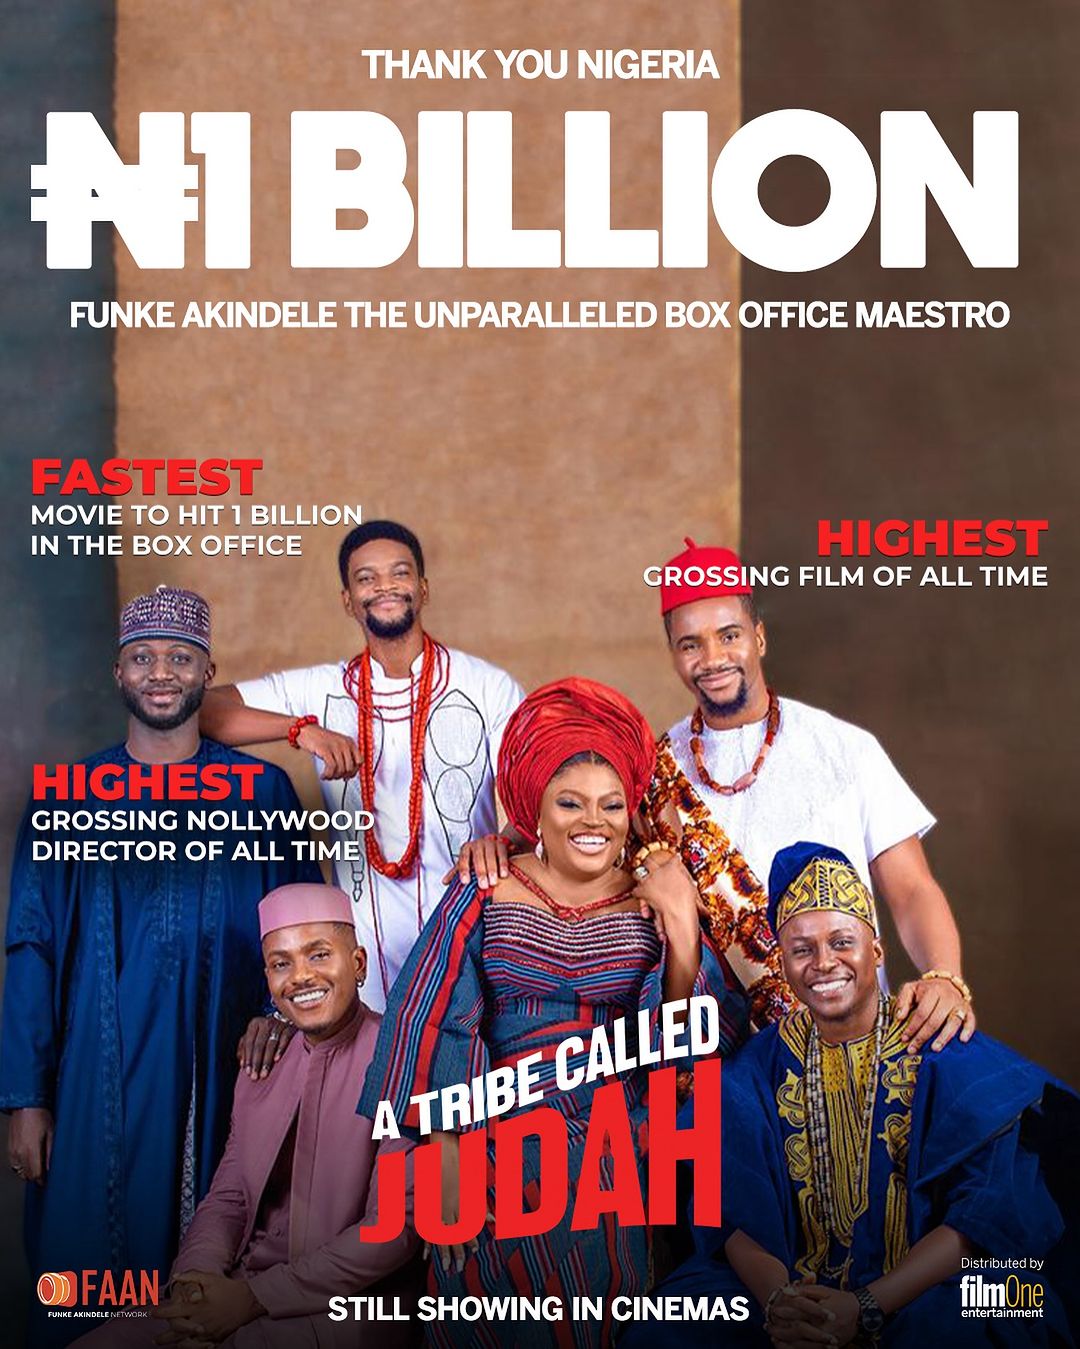 Funke Akindele’s Film ‘A Tribe Called Judah’ Hits N1 Billion in Box Office Earnings